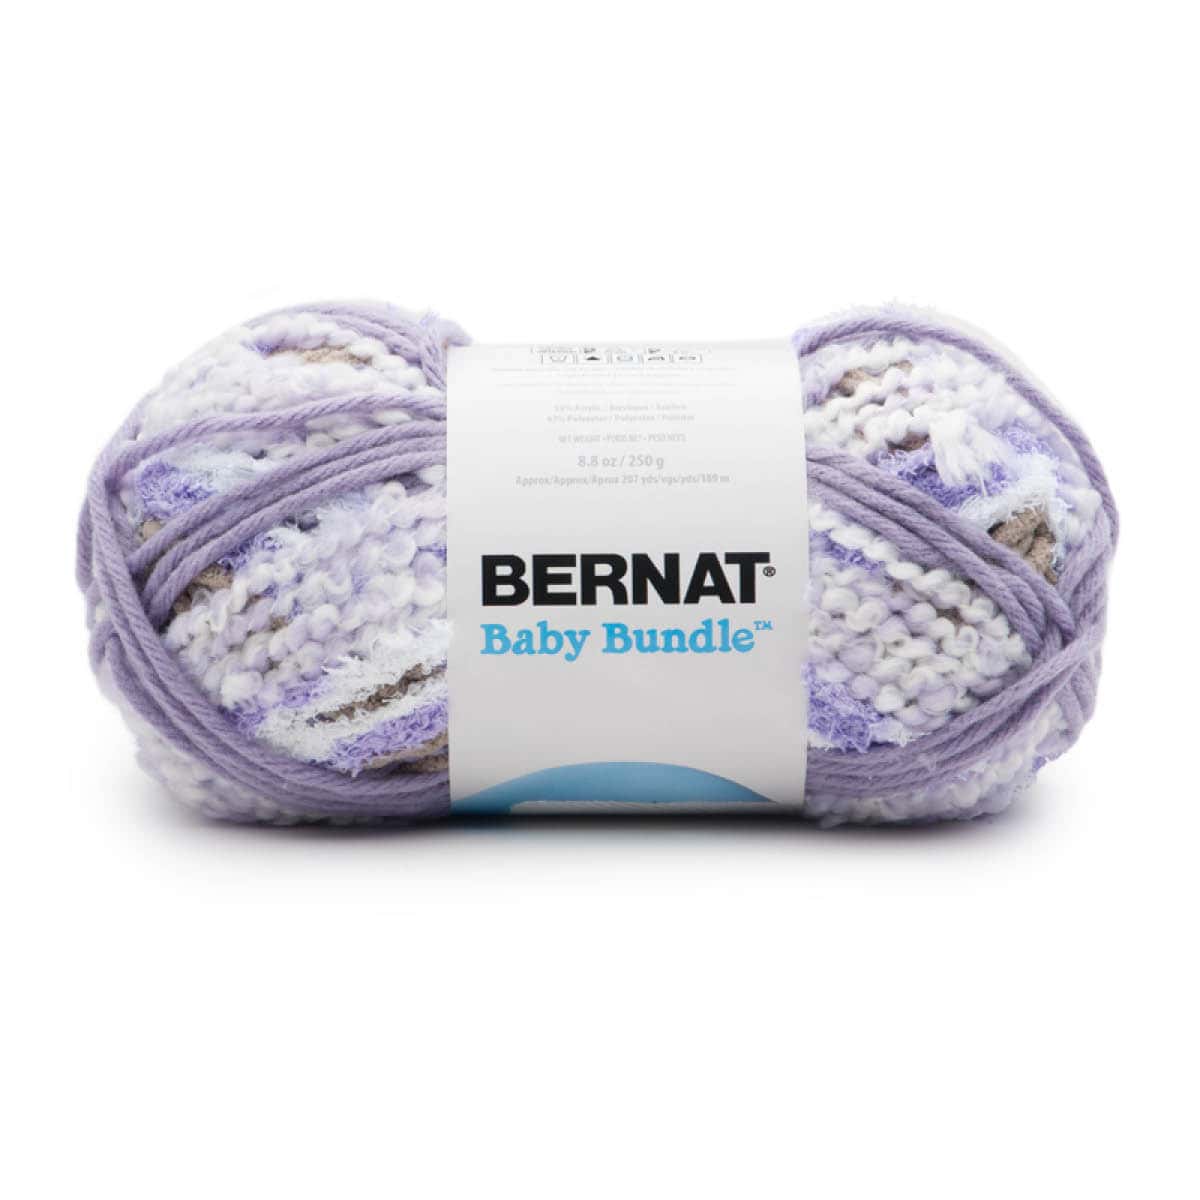 Bernat Baby Bundle Yarn Products